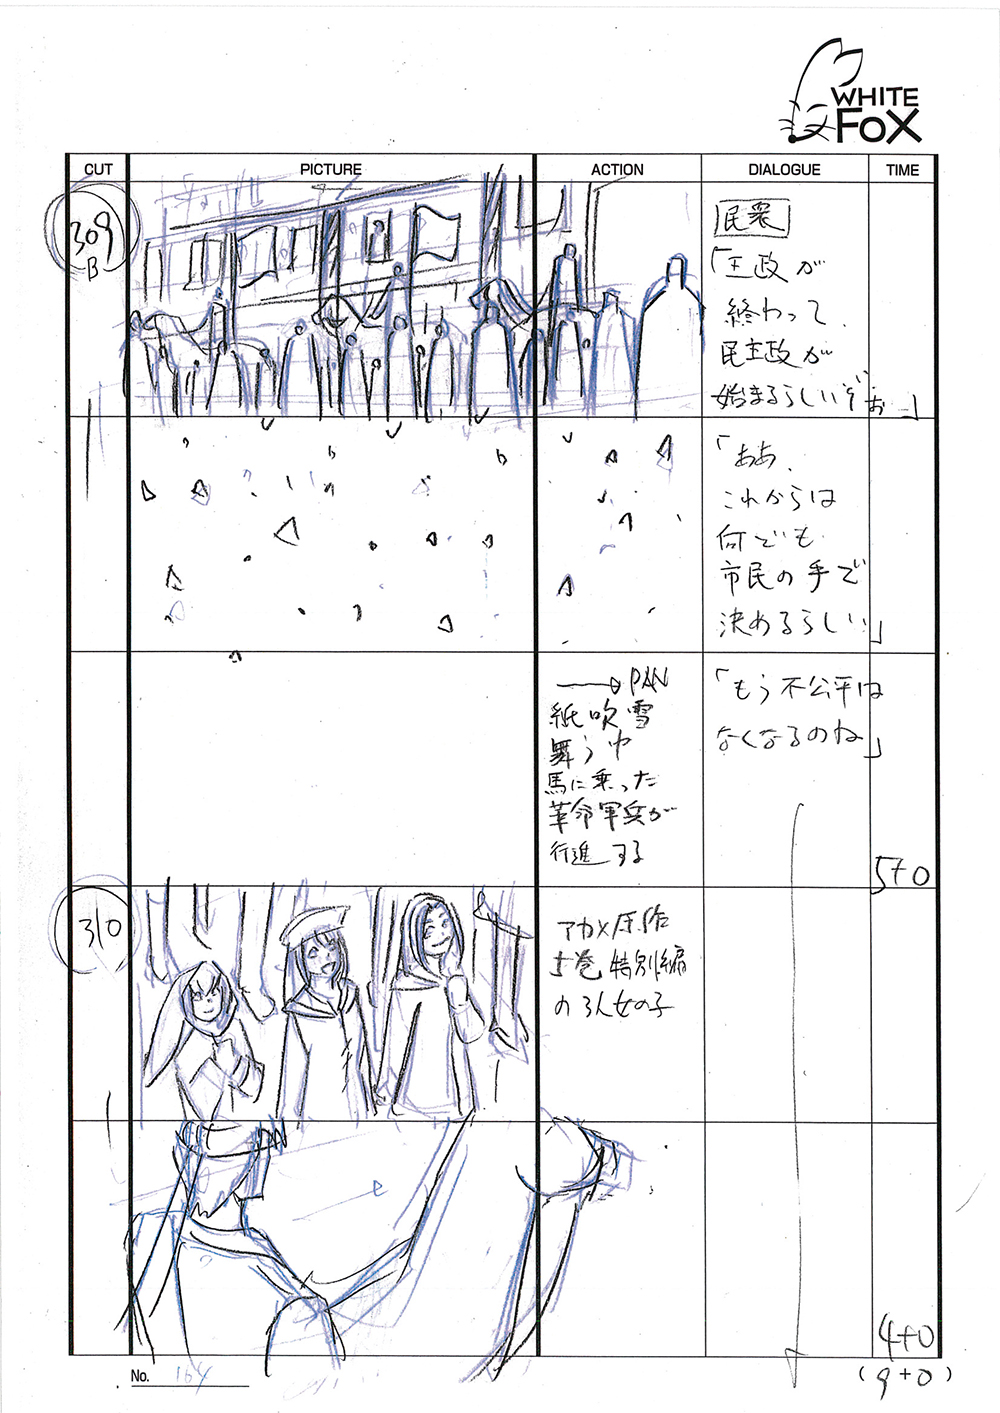 Akame ga Kill Episode 24 Storyboard Leak 169